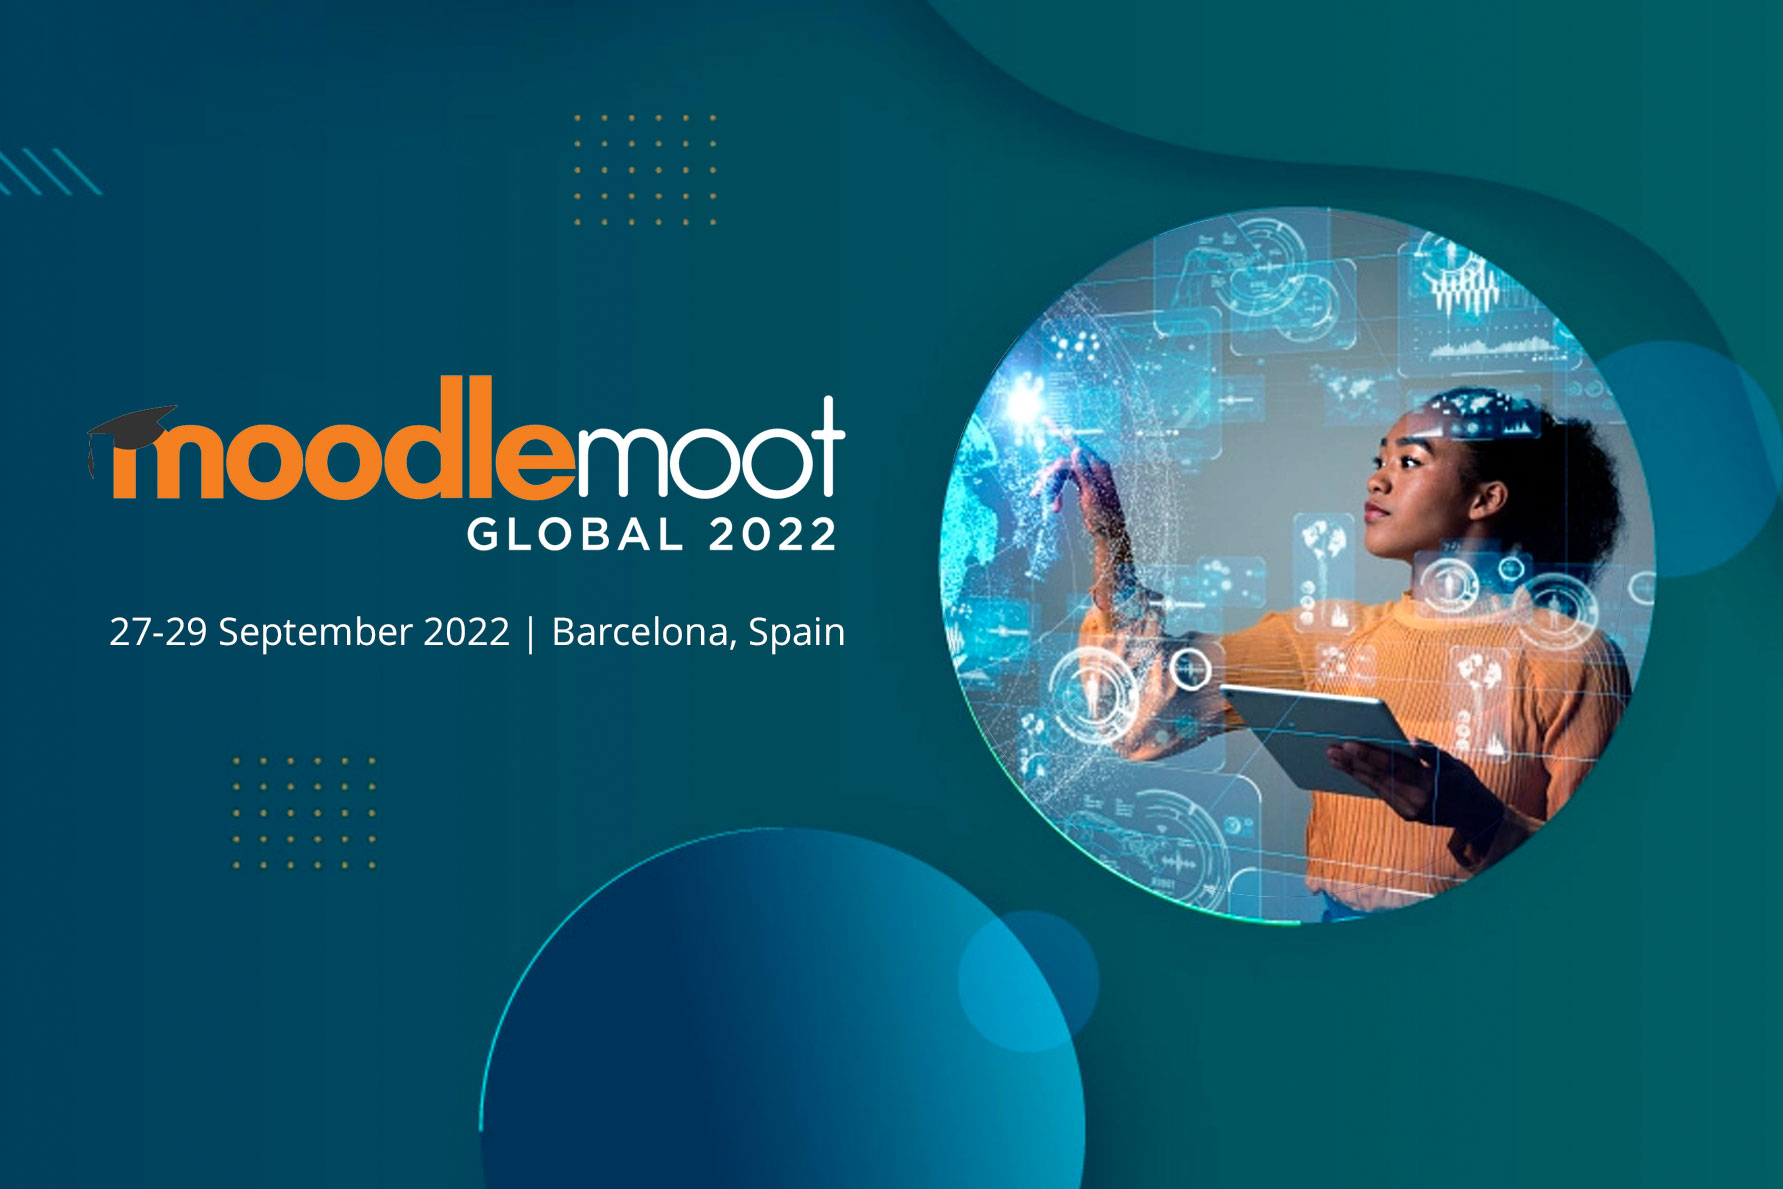 Participarem en la MoodleMoot Global 2022